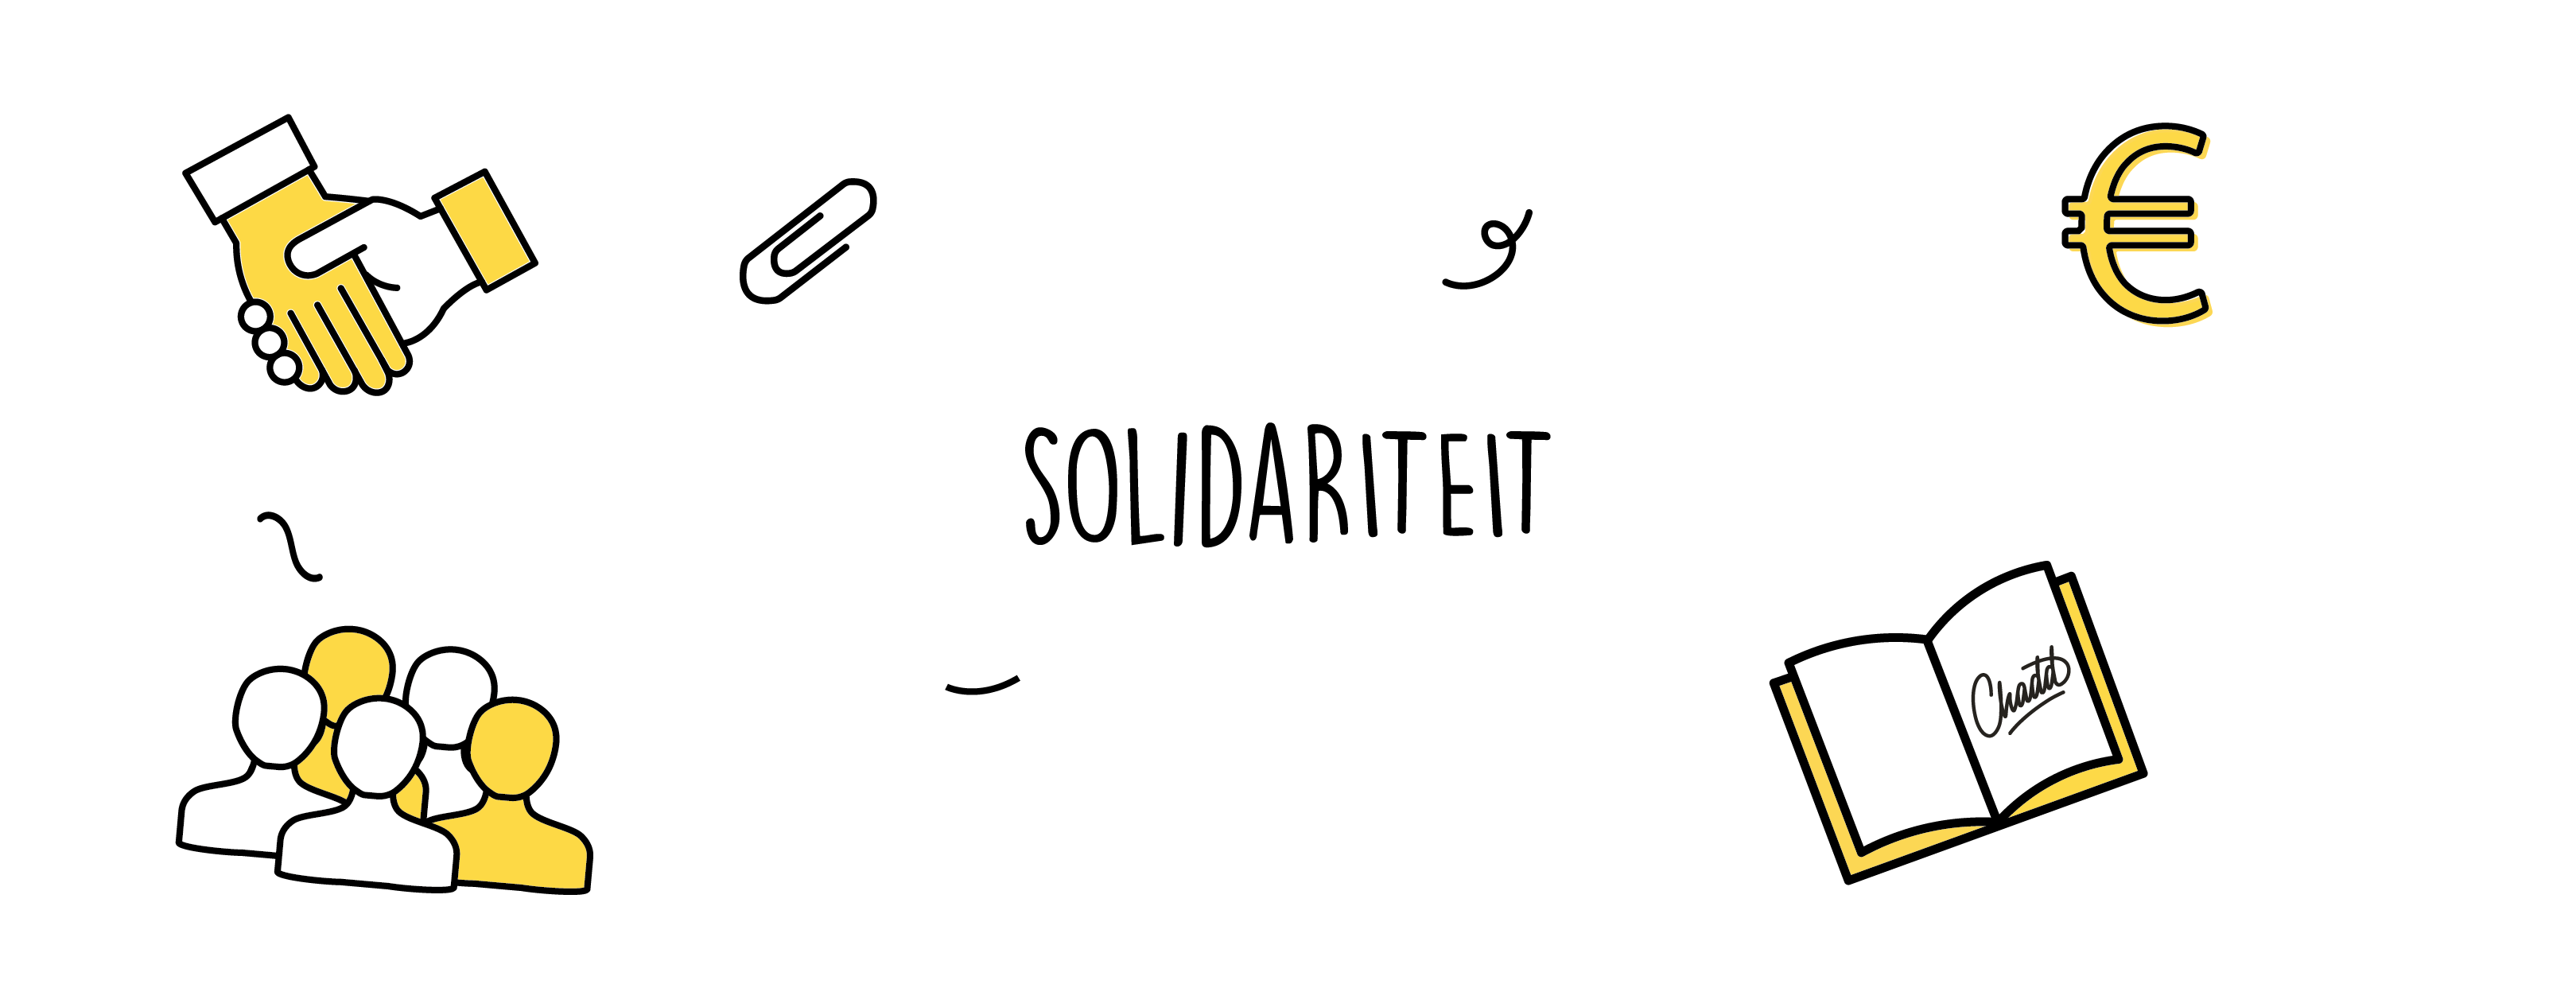 Solidariteit